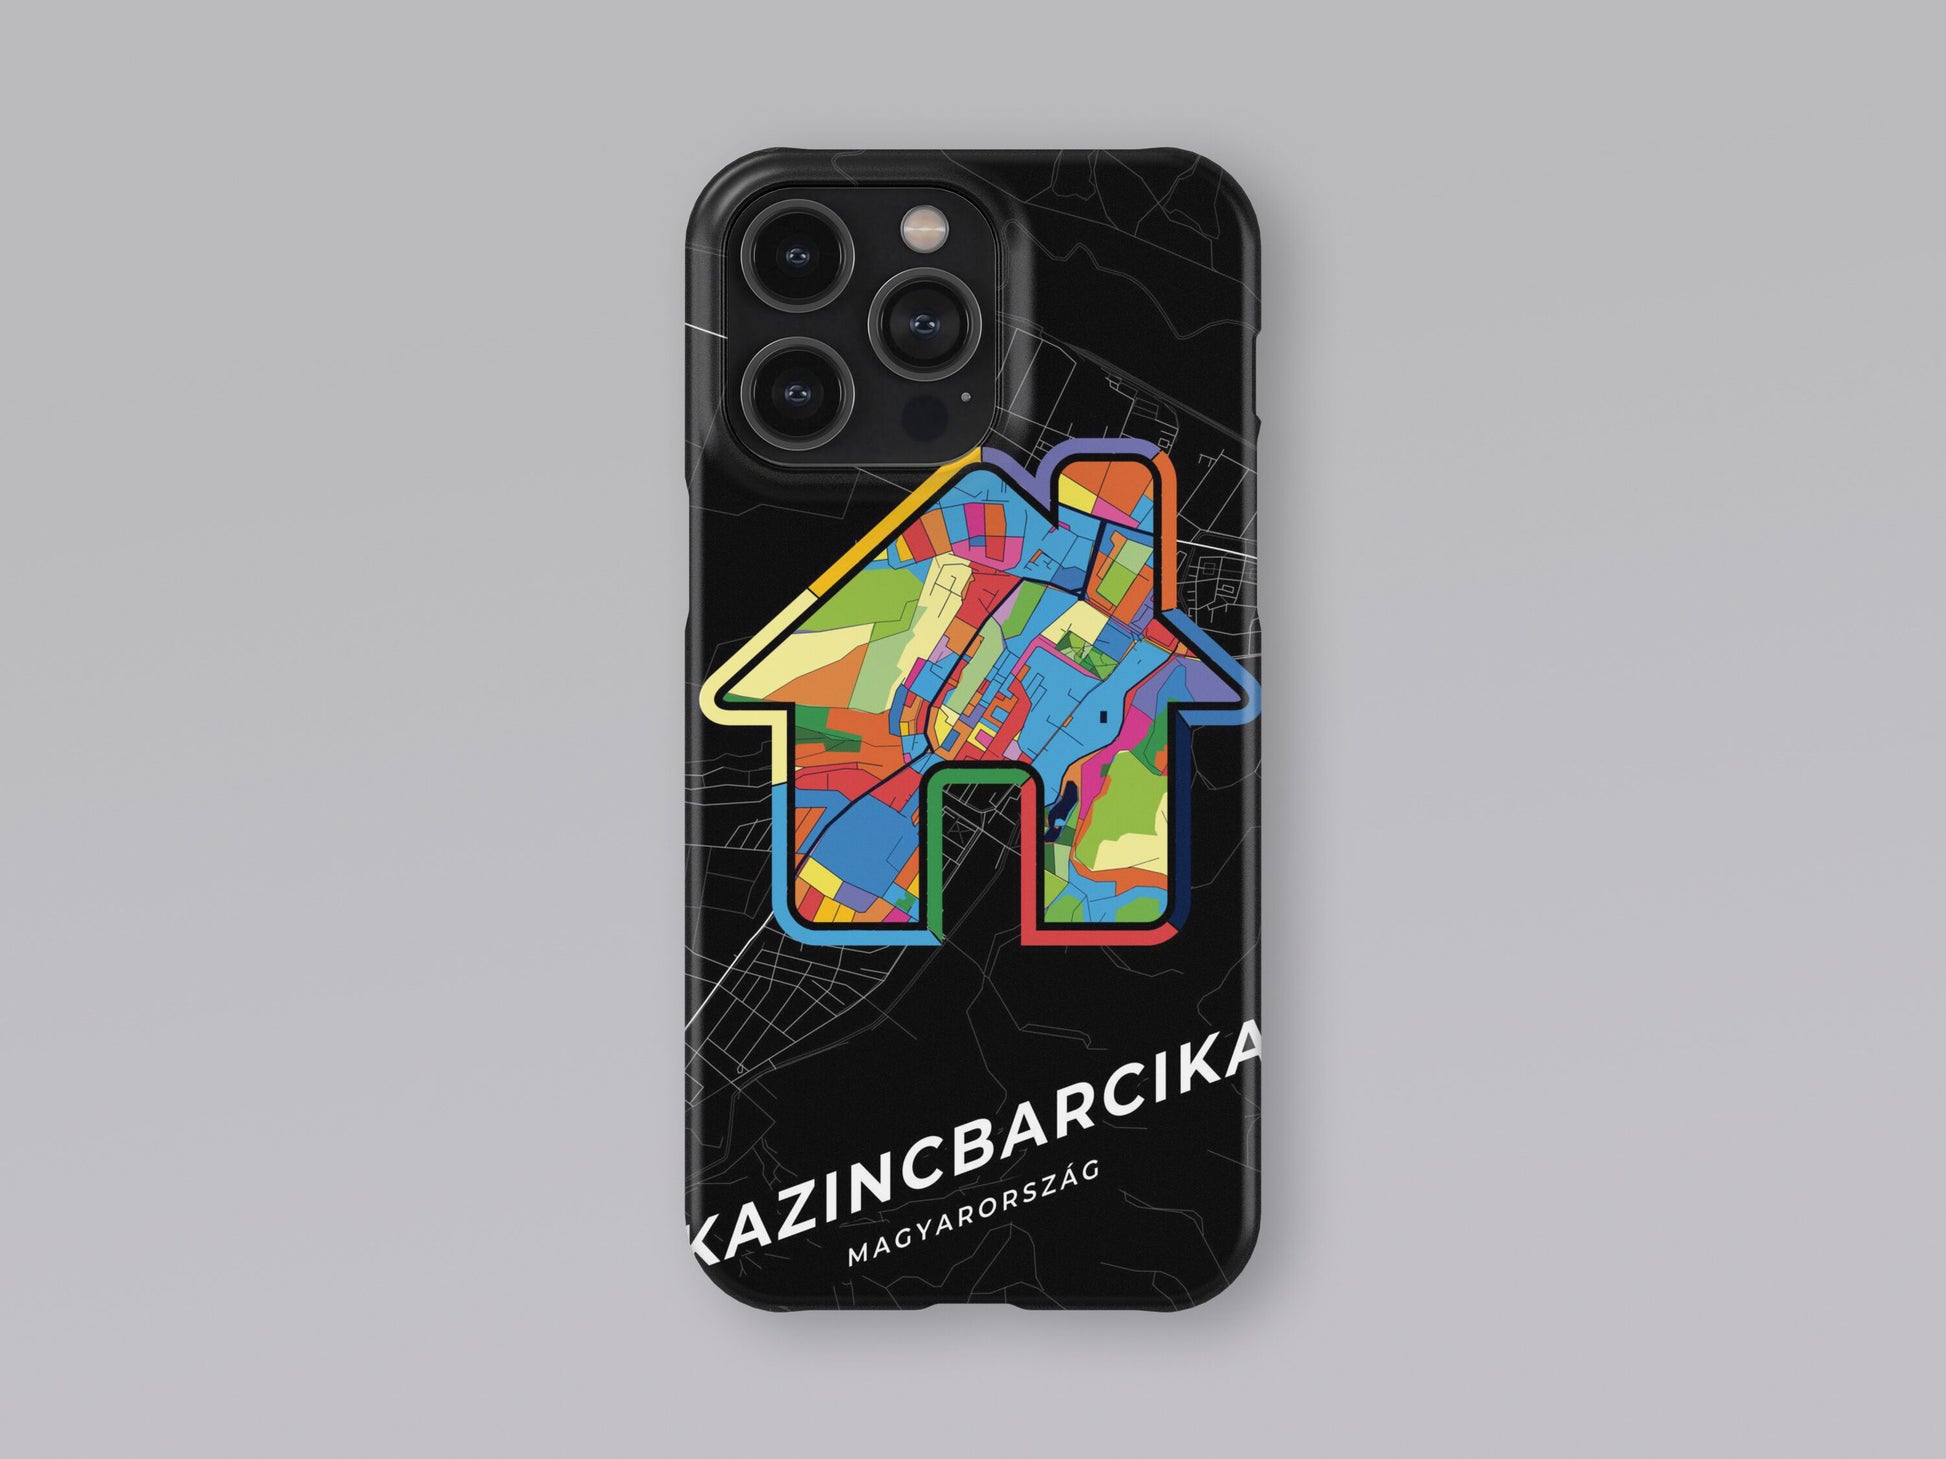 Kazincbarcika Hungary slim phone case with colorful icon. Birthday, wedding or housewarming gift. Couple match cases. 3